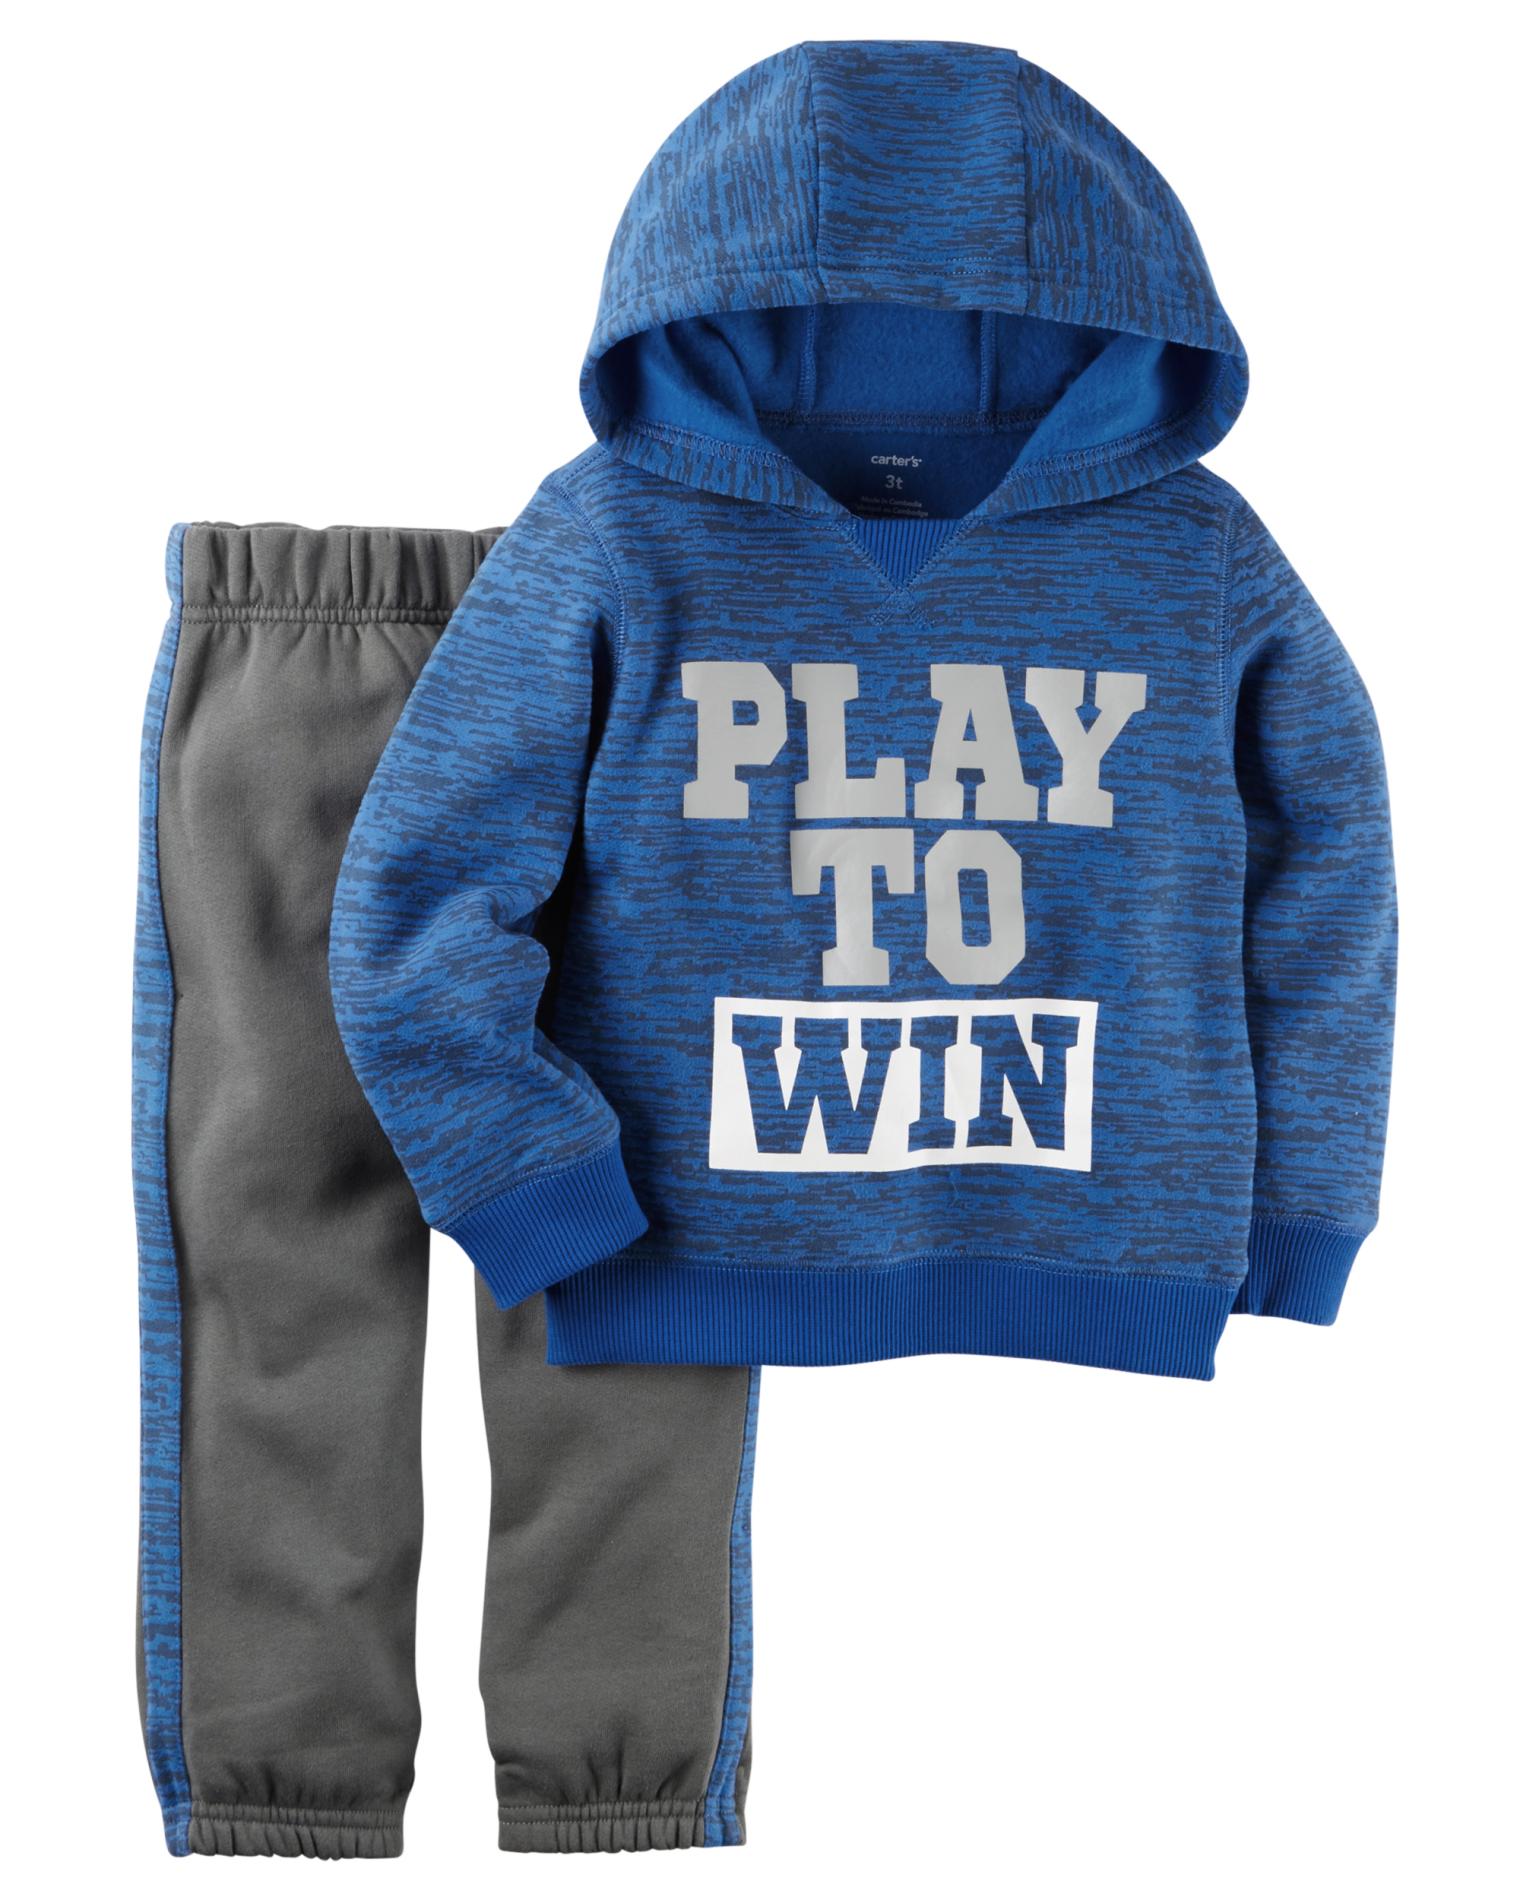 Carter's Newborn, Infant & Toddler Boys' Hooded Sweatshirt & Pants - Play to Win